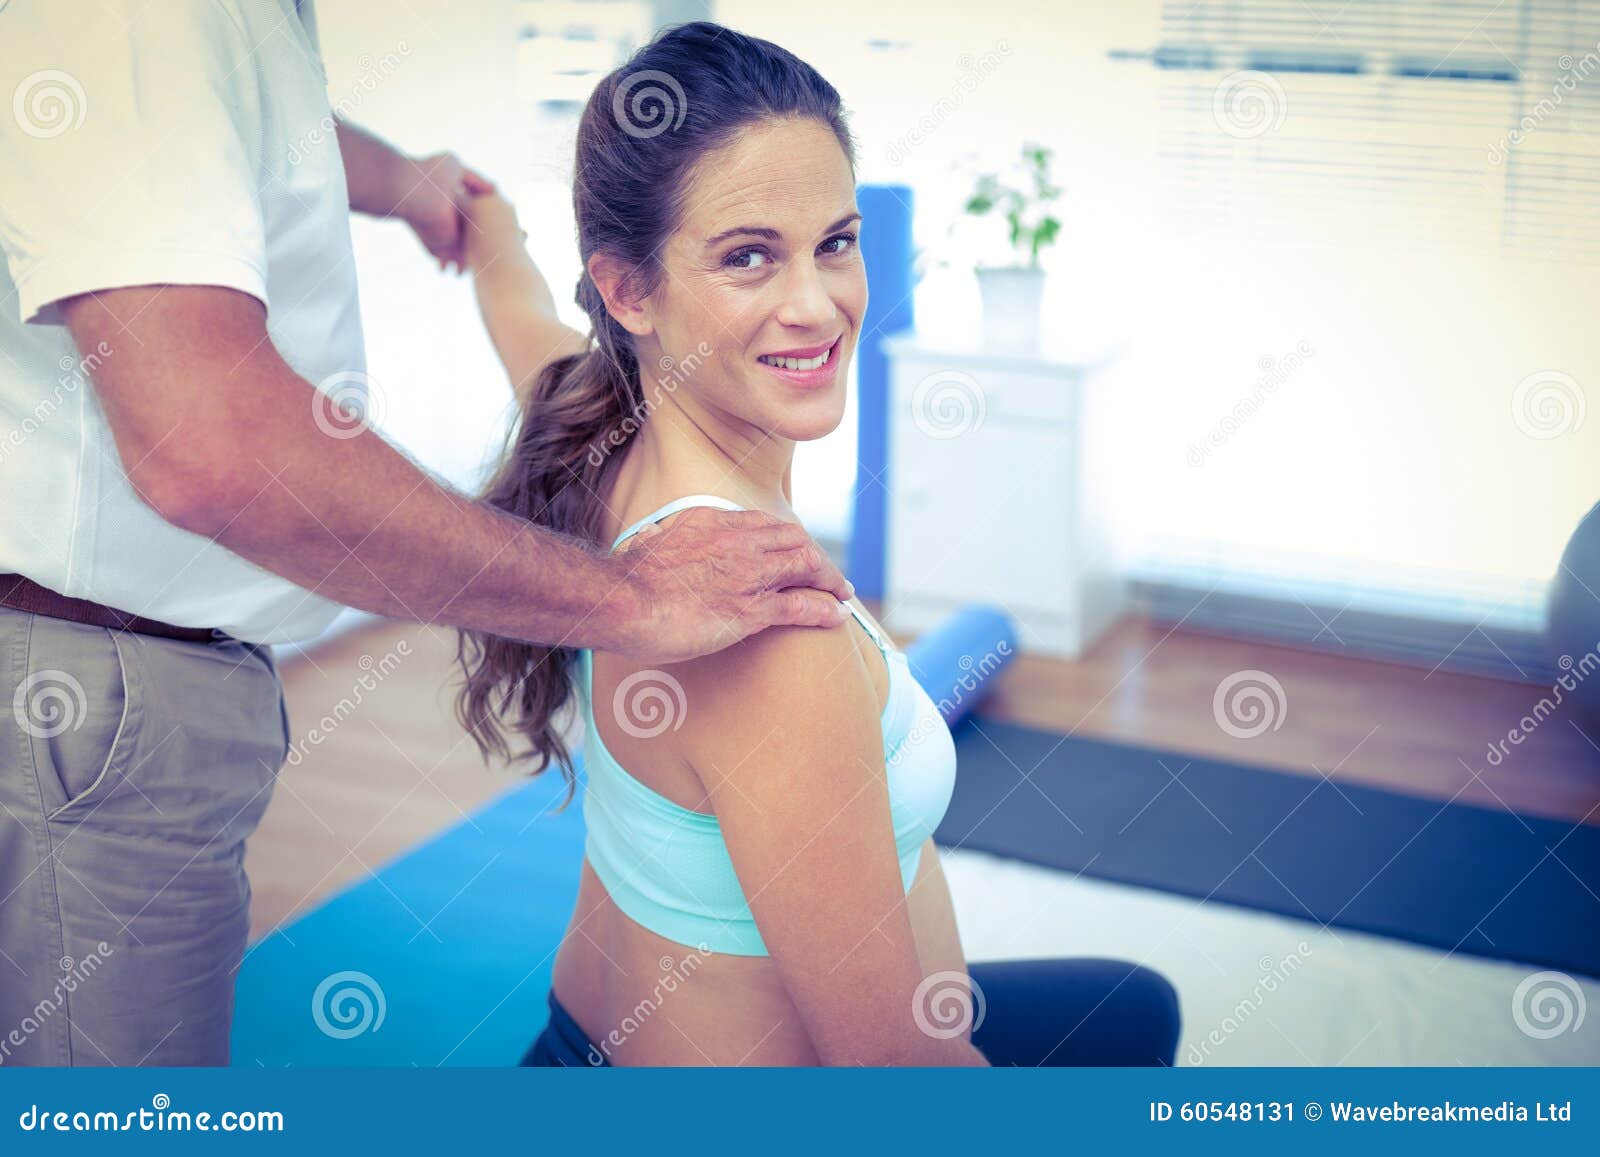 Portrait Of Pregnant Woman Receiving Massage Stock Image Image Of Focus Mature 60548131